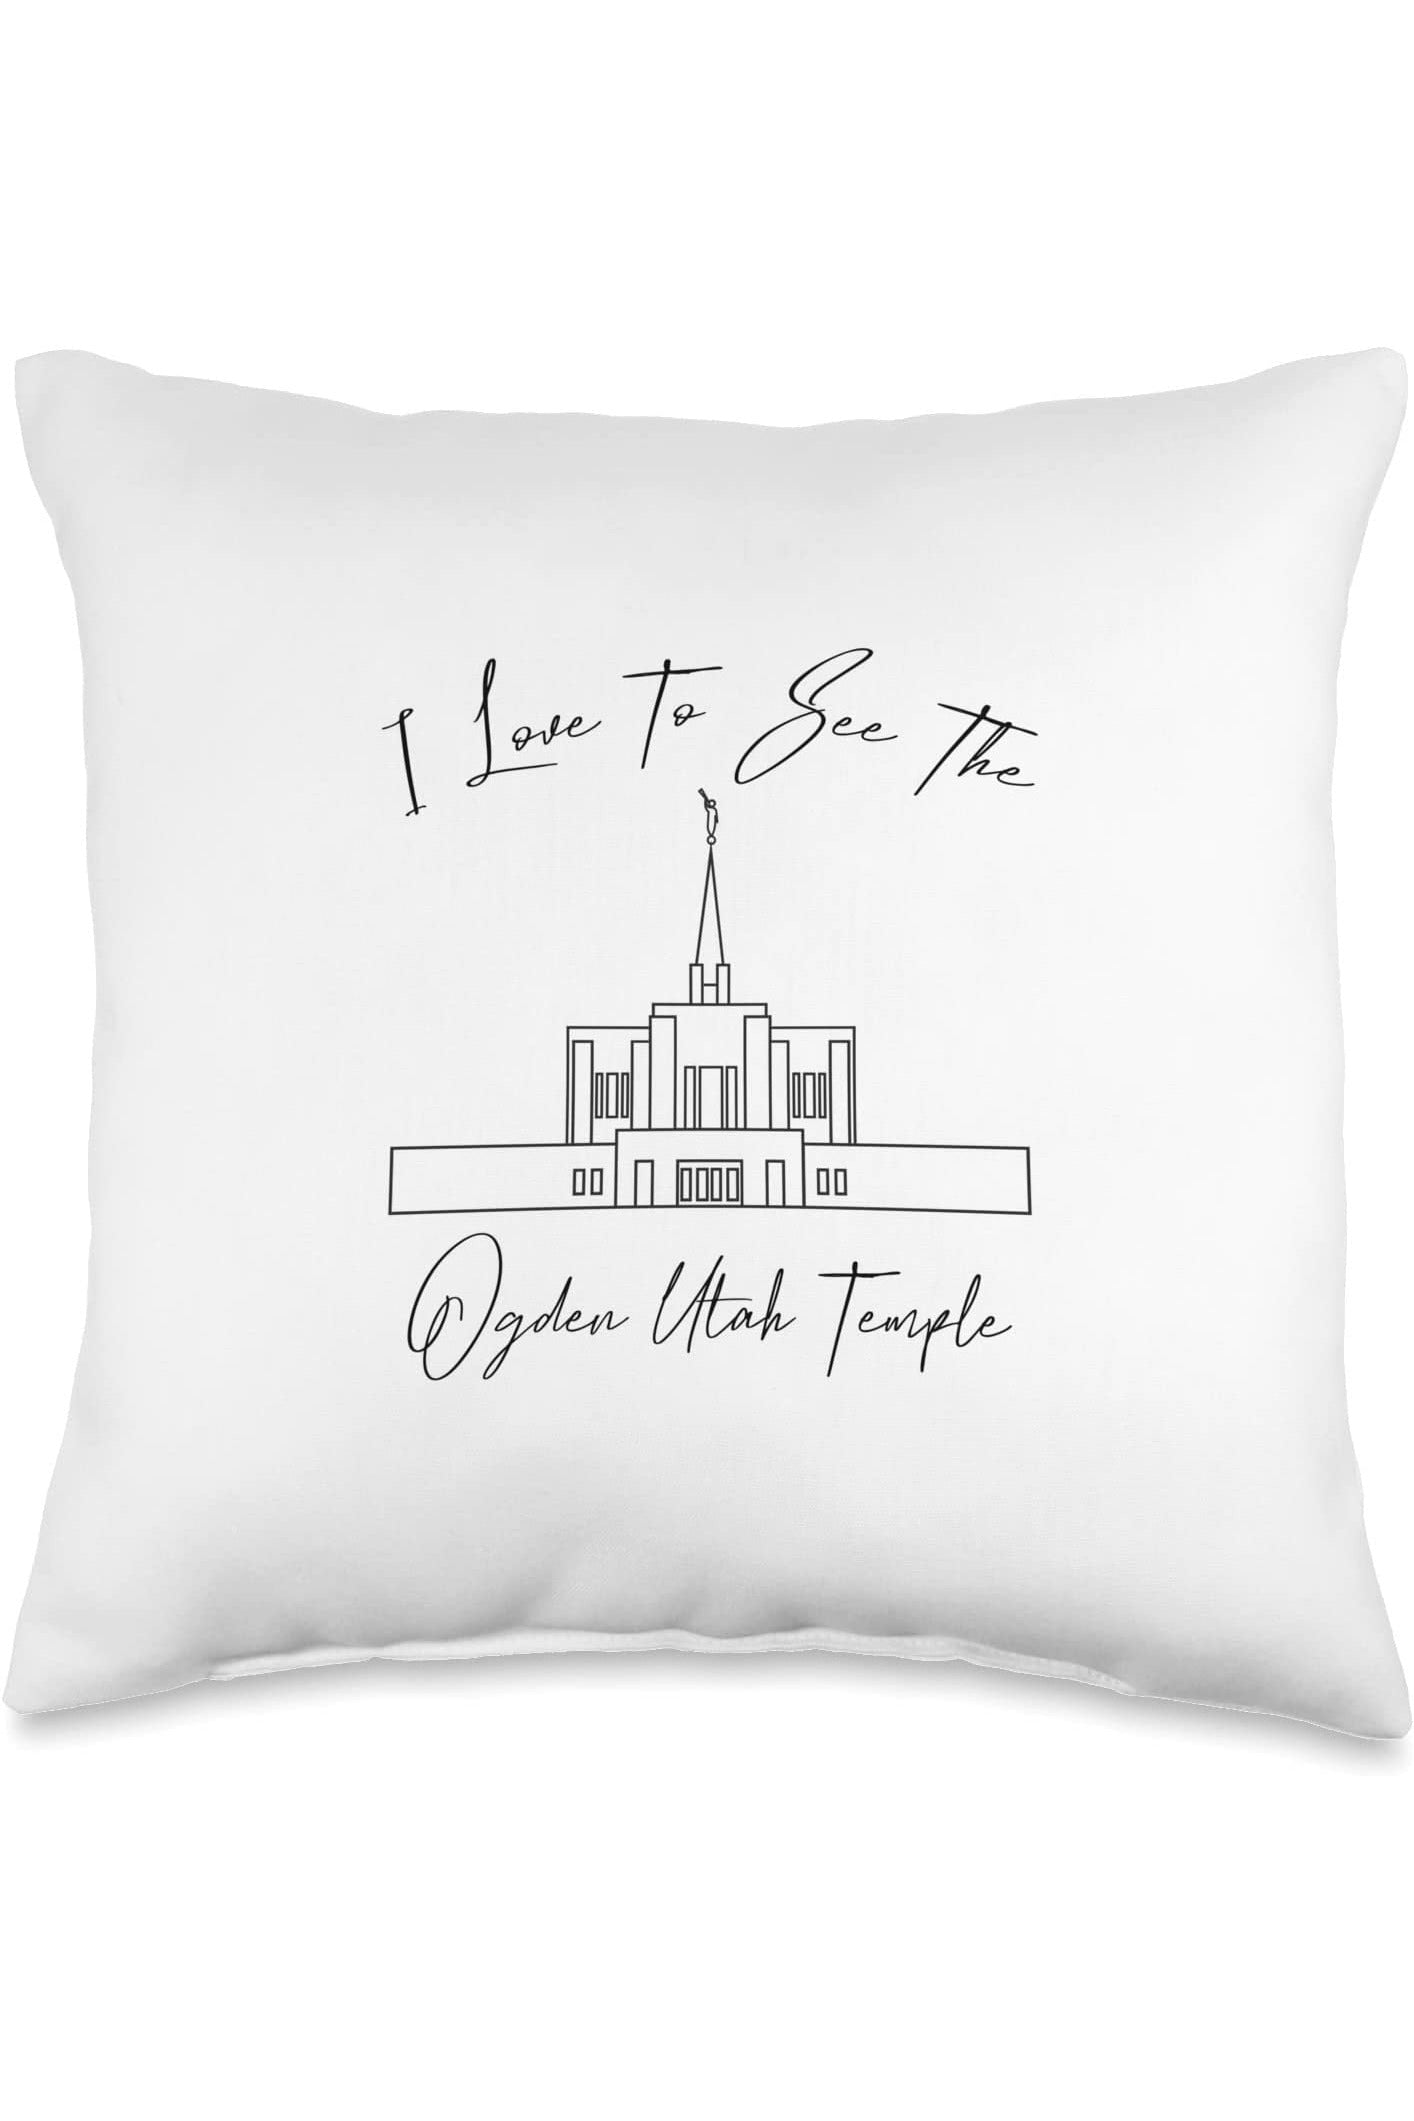 Ogden Utah Temple Throw Pillows - Calligraphy Style (English) US